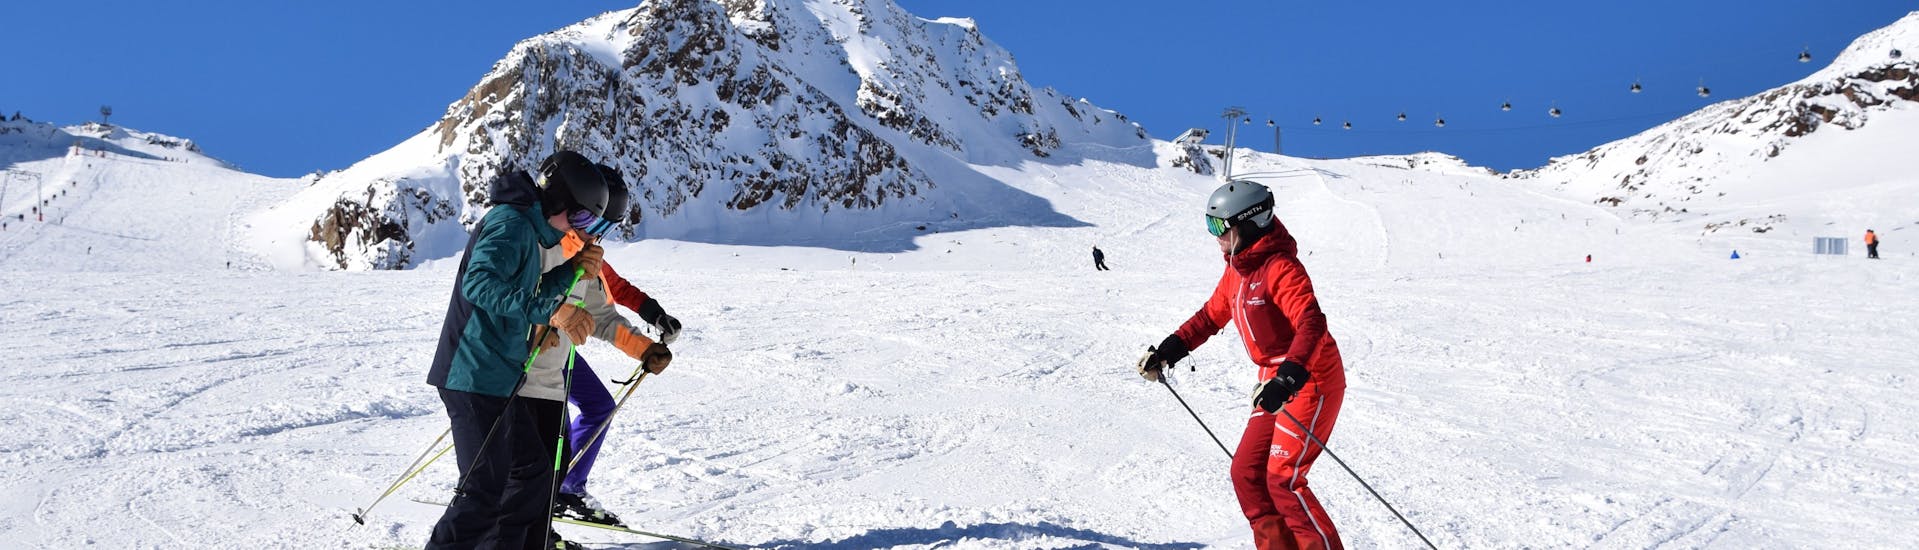 Lezioni di sci per adulti a partire da 15 anni principianti assoluti.